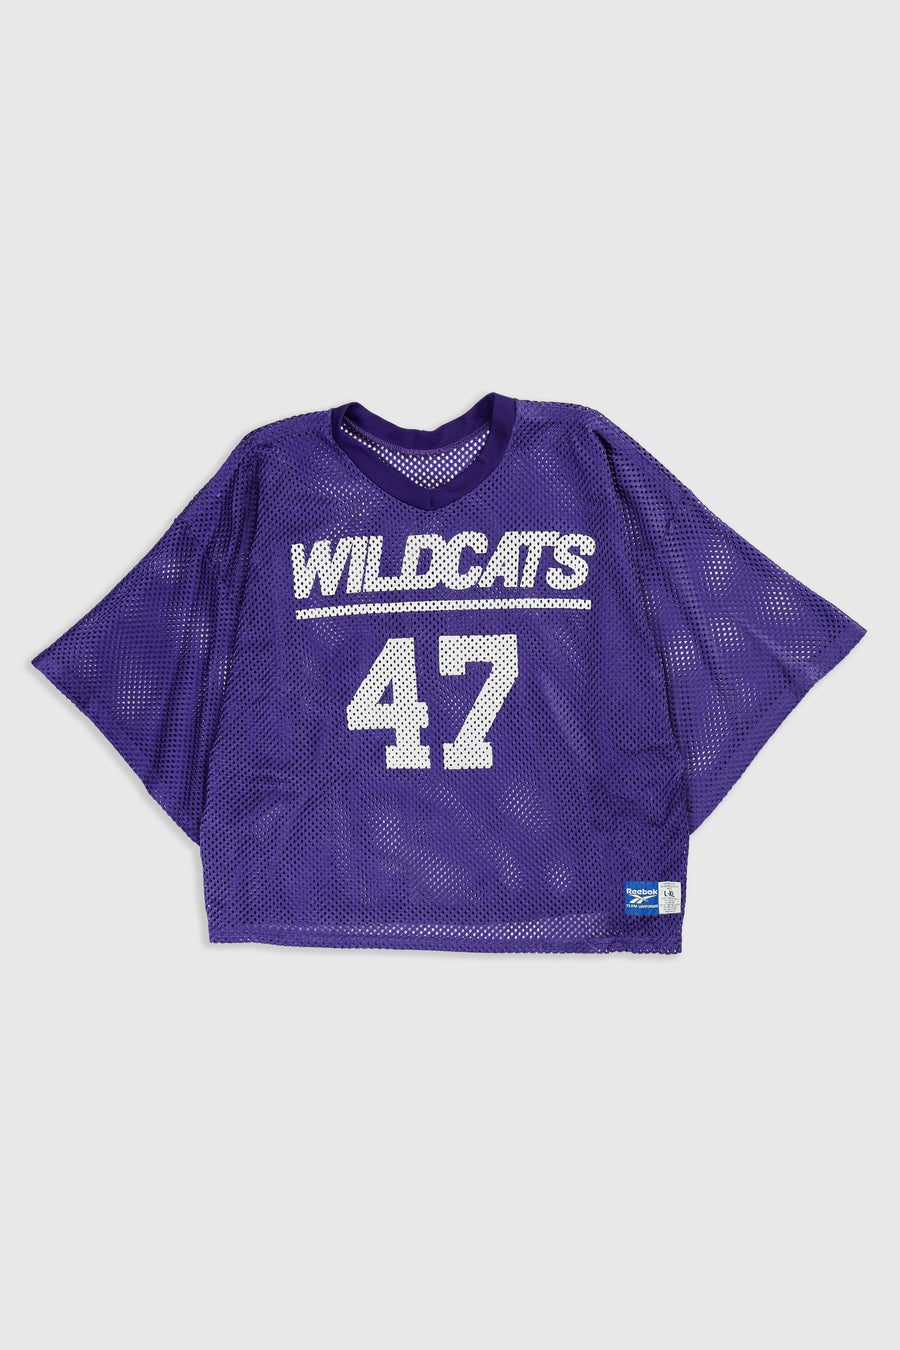 Vintage Wildcats Football Jersey - L